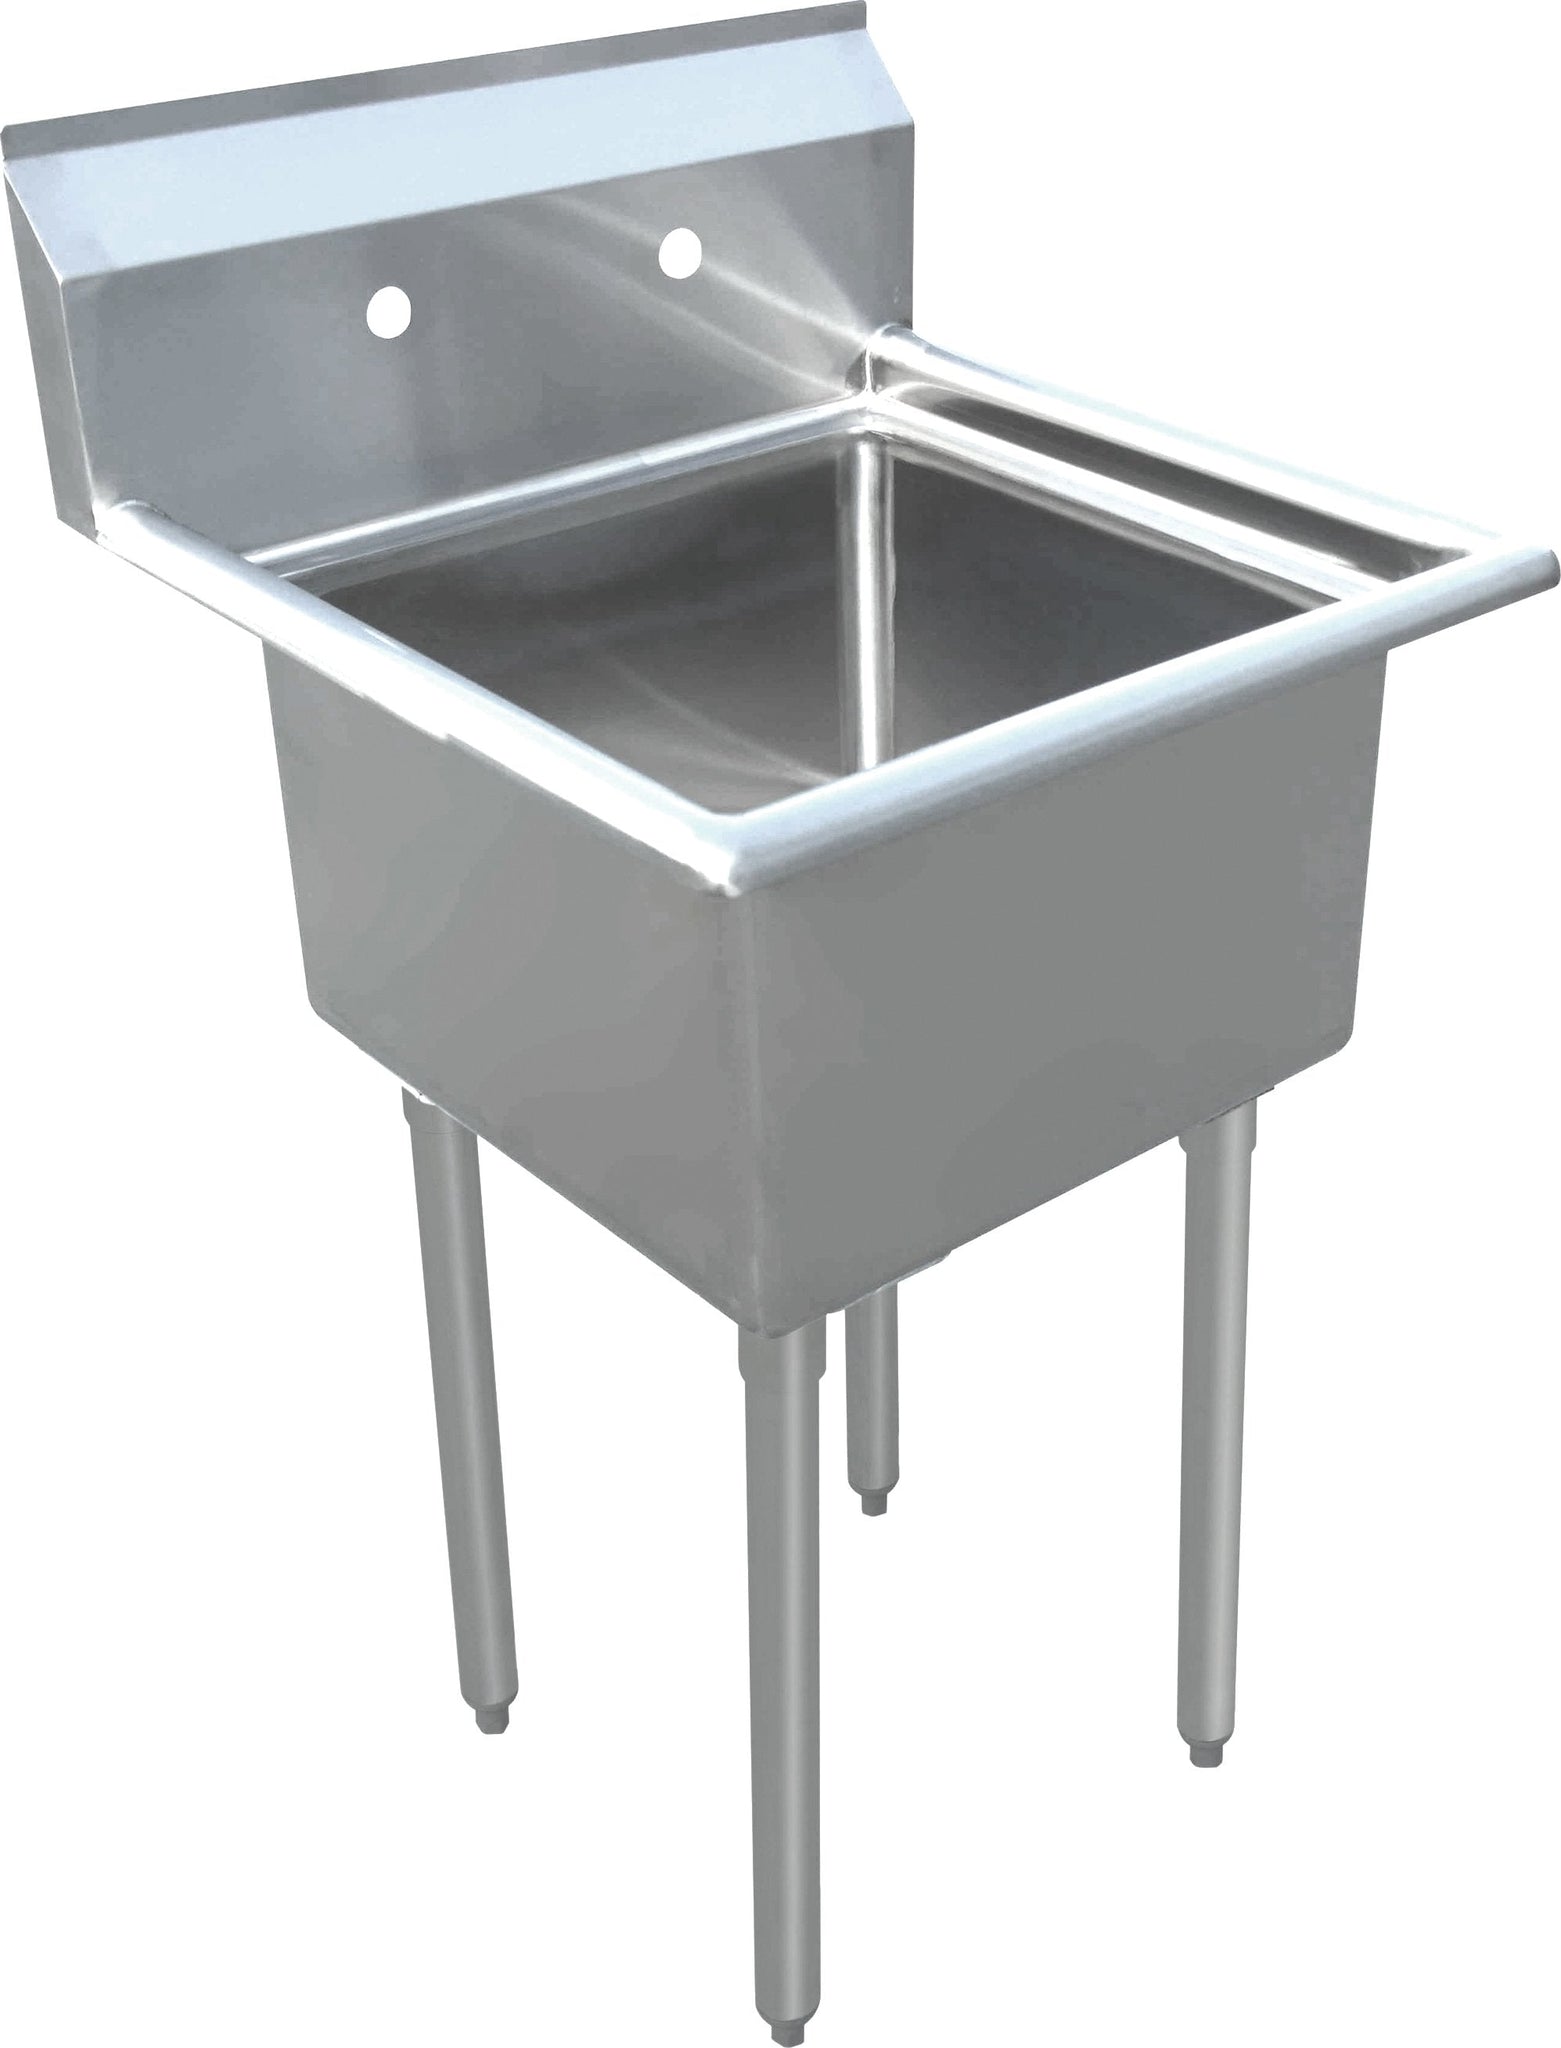 Omcan - No Drain Board 24” x 24” x 14” Pot Sink with Corner Drain - 22118